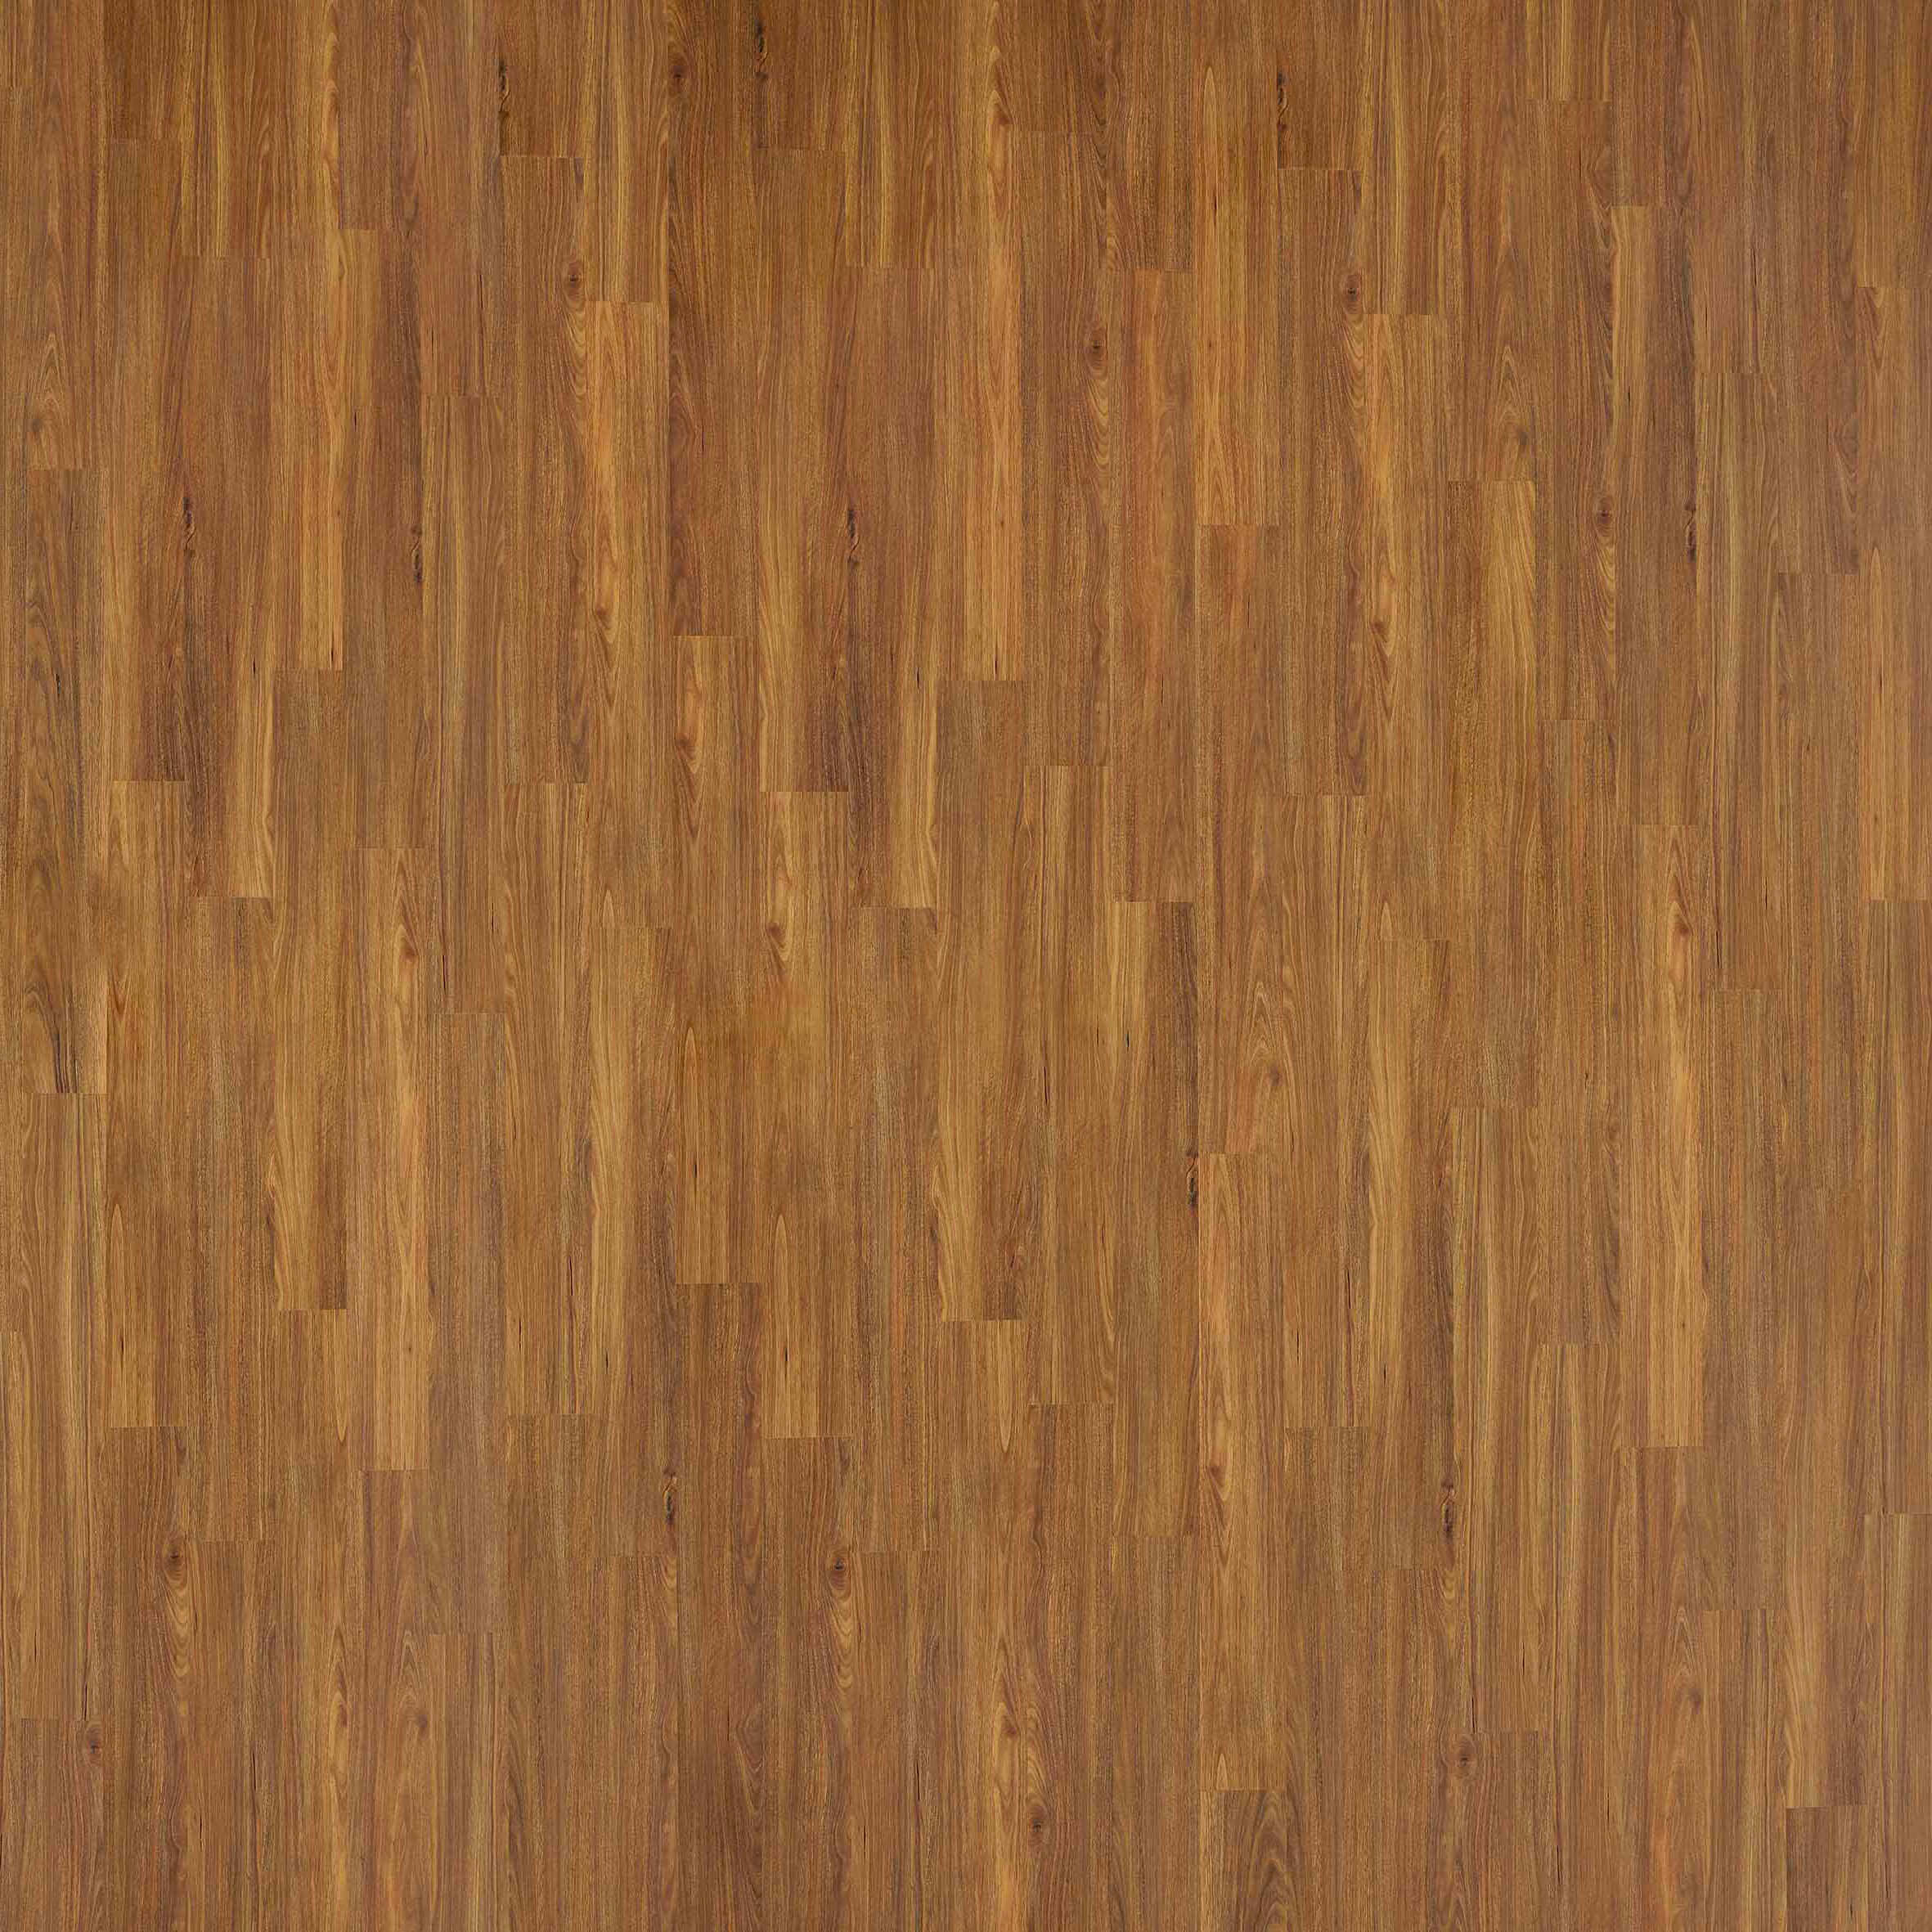 Airstep Eucalyptus Steps Gloss Laminate Flooring Spotted Gum - Online Flooring Store